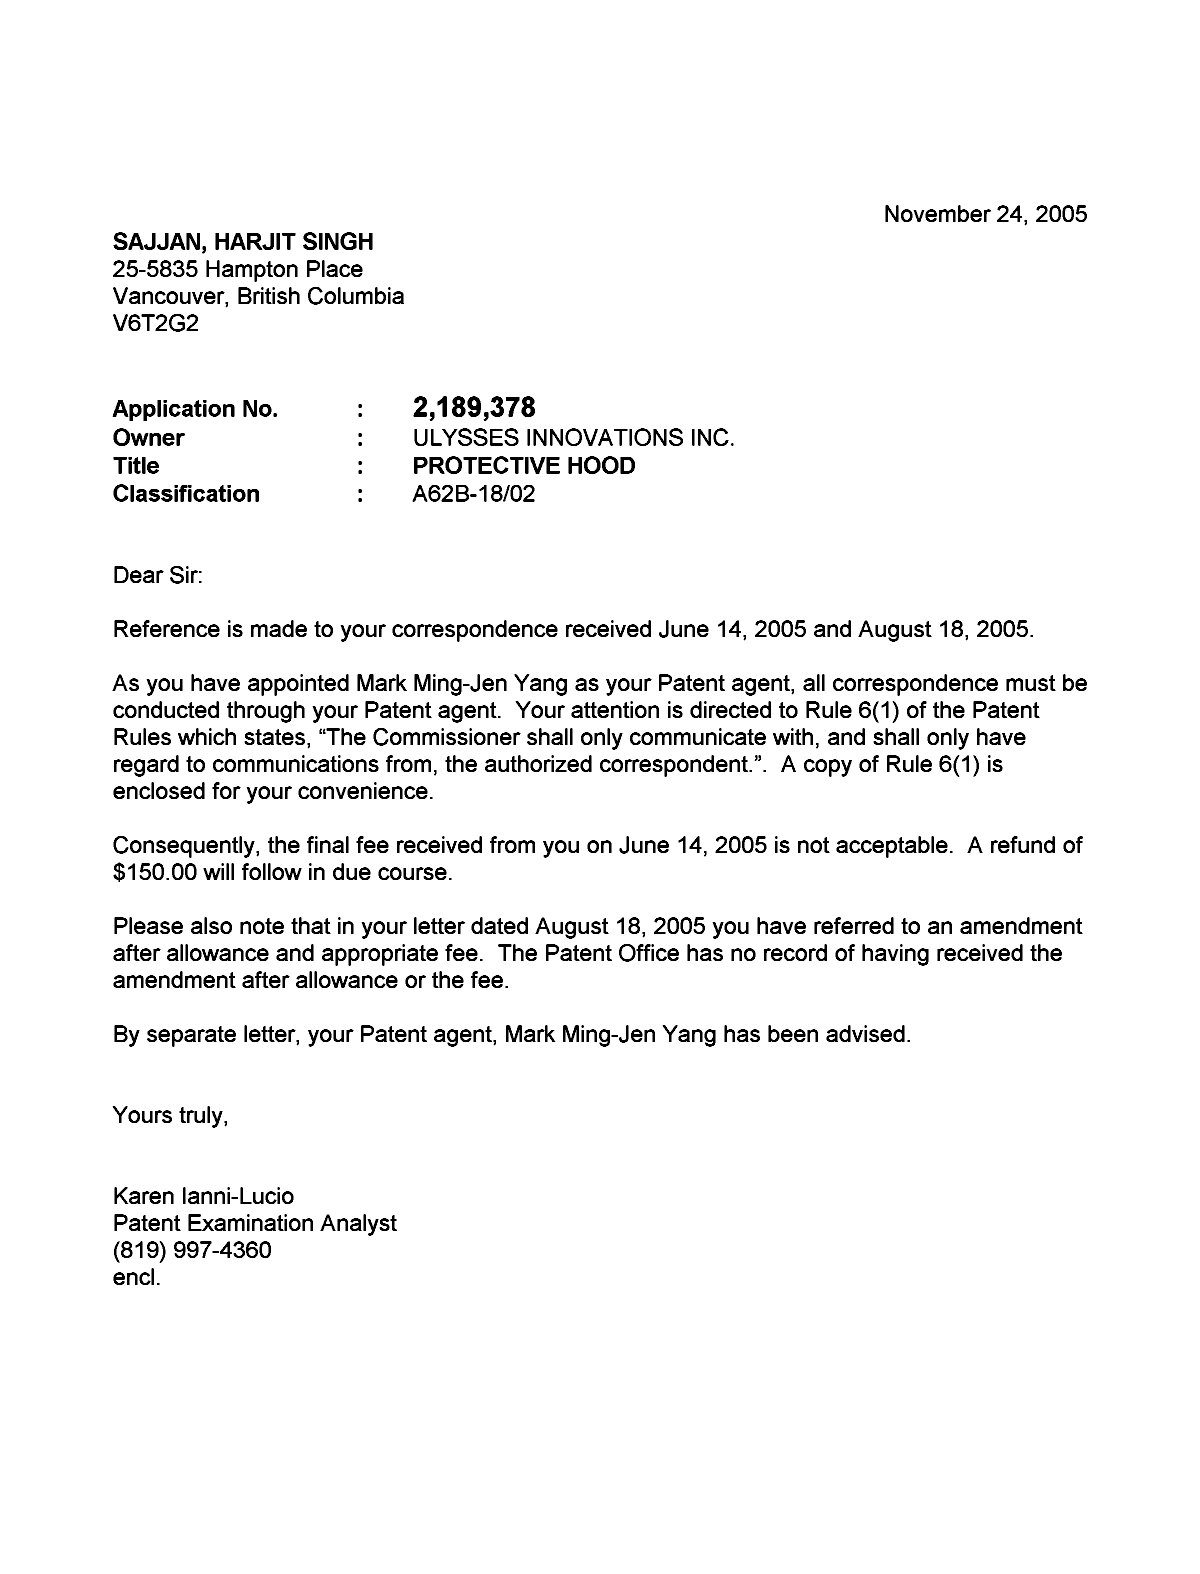 Canadian Patent Document 2189378. Correspondence 20041224. Image 1 of 1